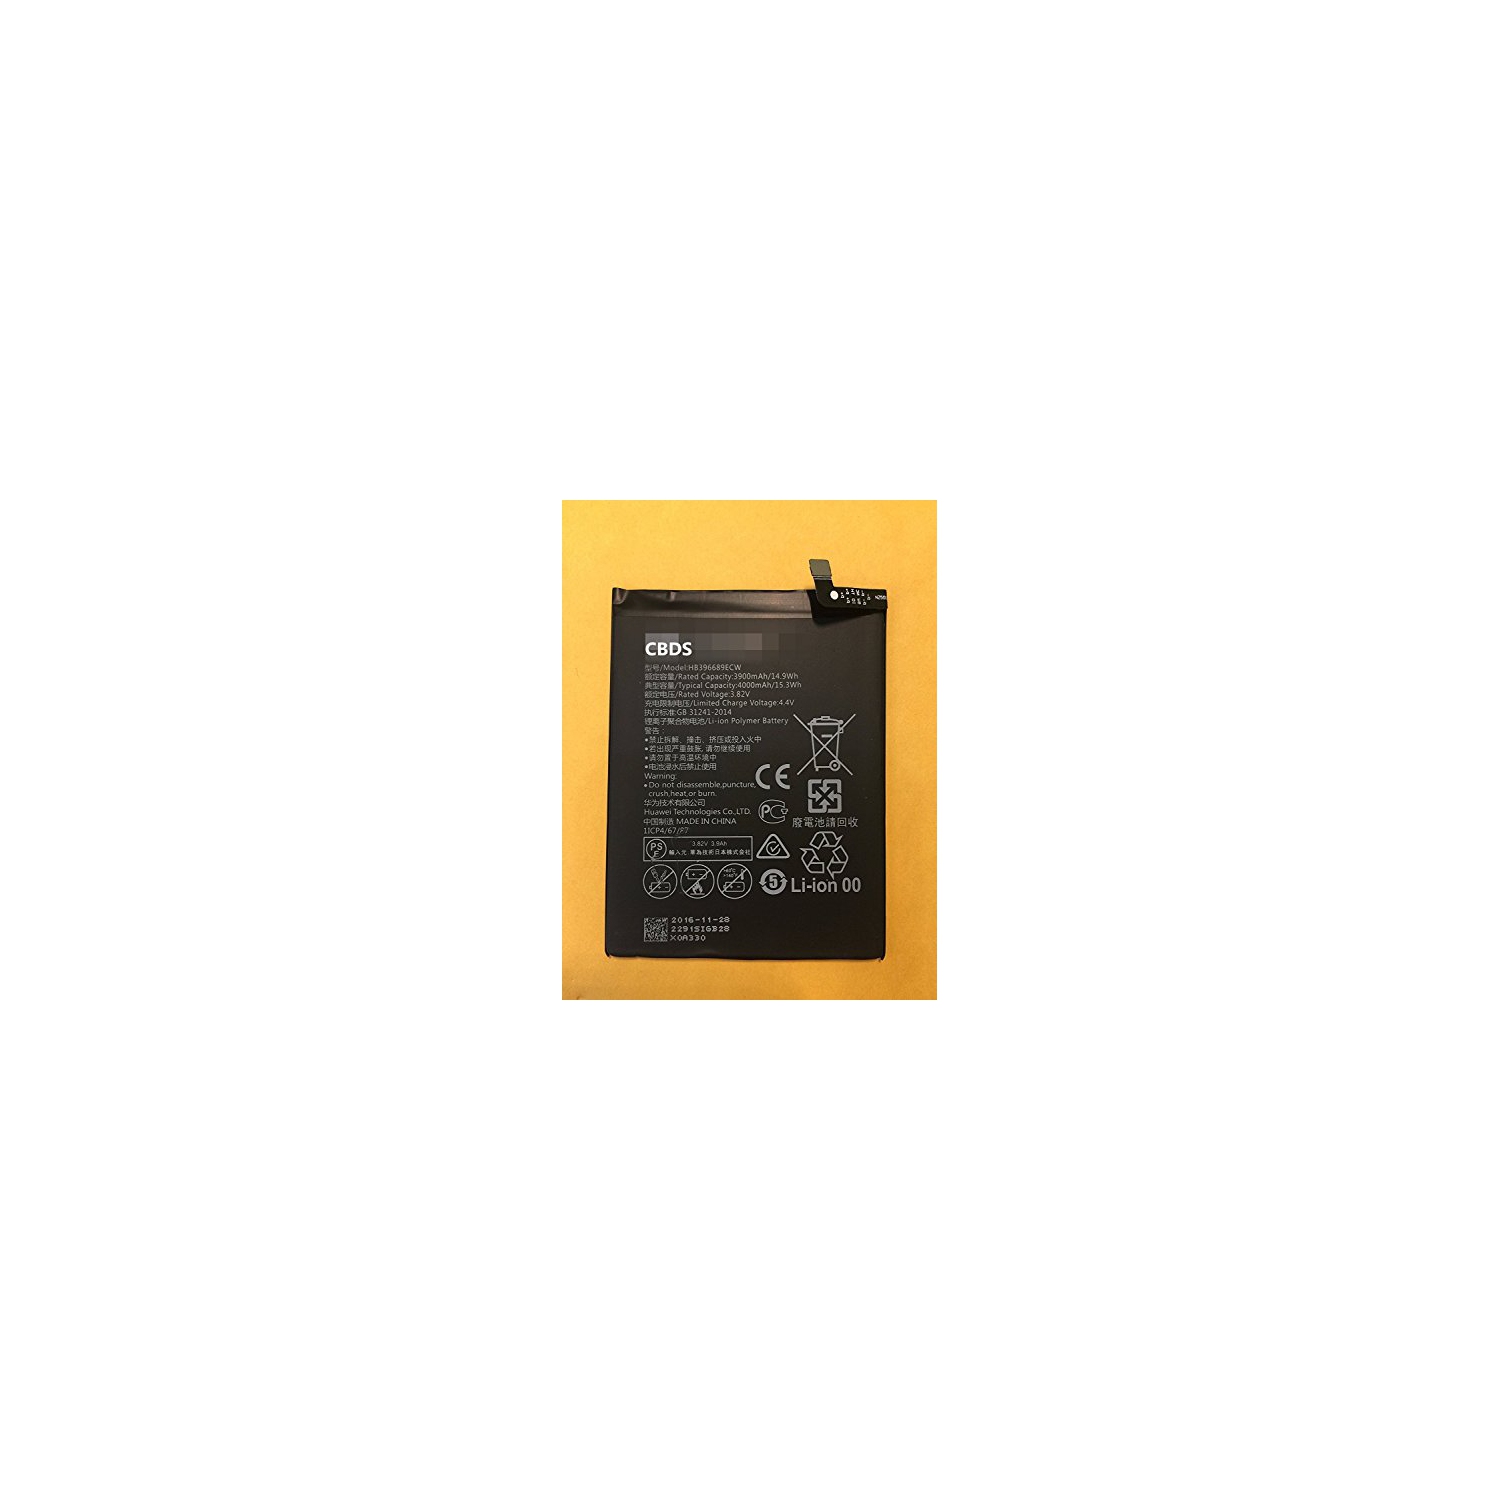 (CBDS) 3900mAh, 14.9 Wh Replacement Battery - Compatible with Huawei MATE9 Mate 9 Mate 9 pro Mate9 pro Mate9pro MHA-L09